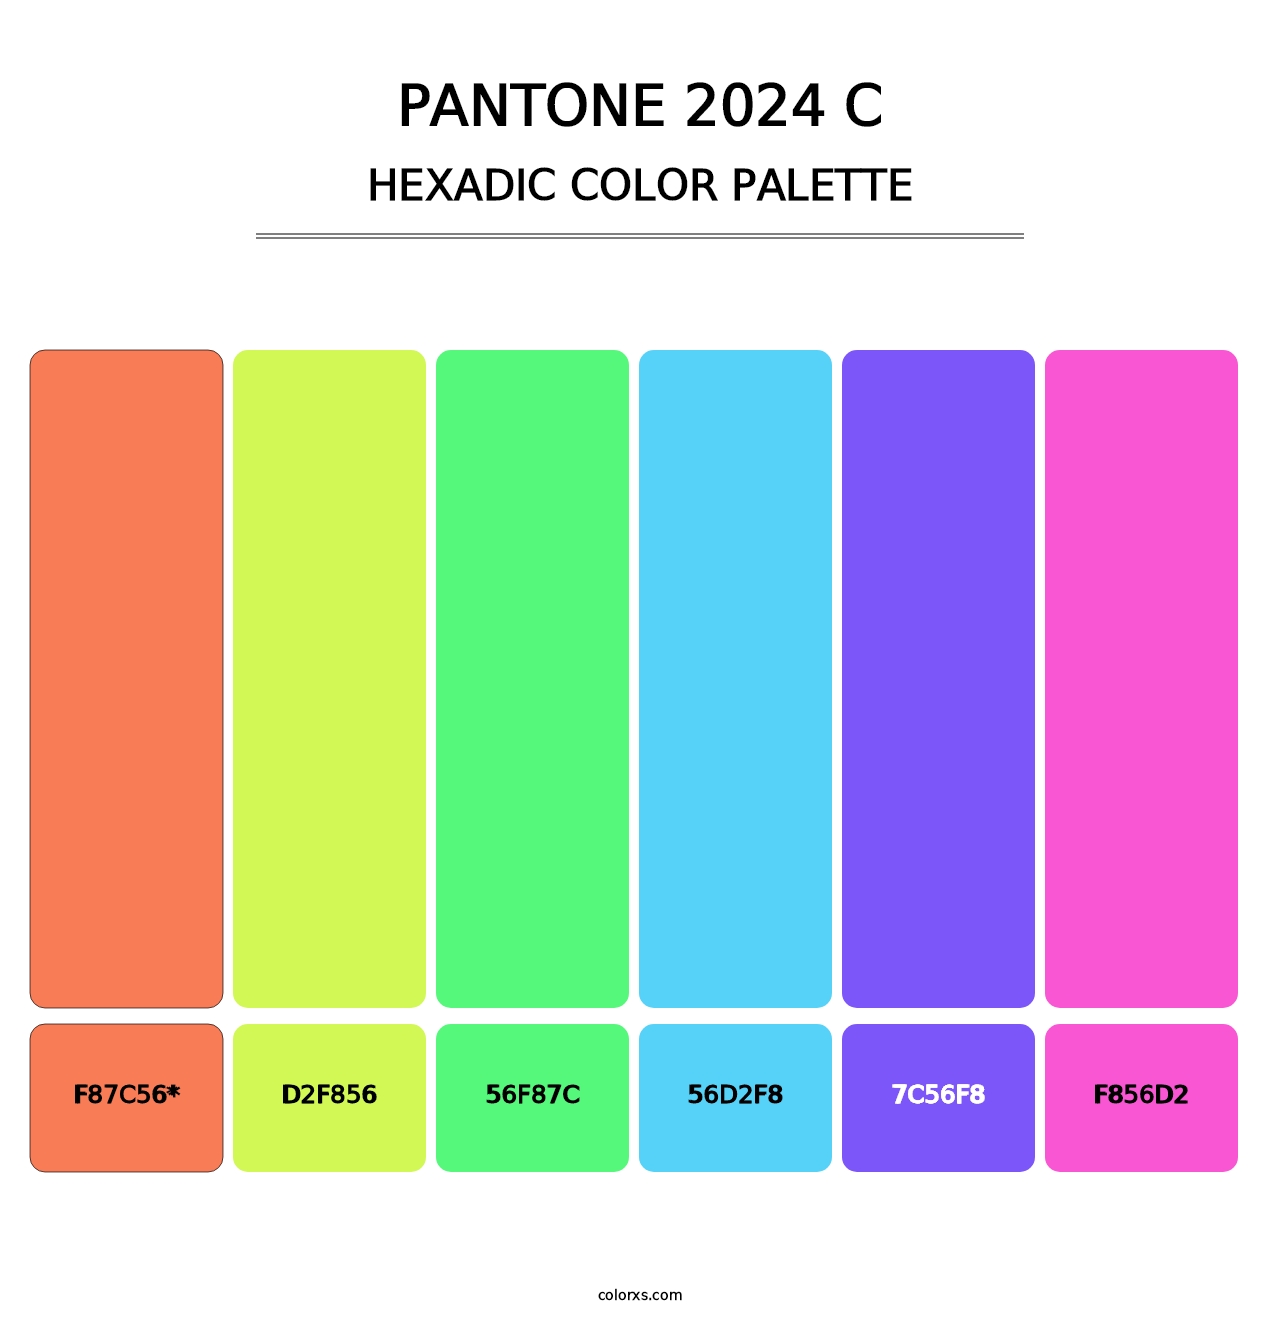 PANTONE 2024 C - Hexadic Color Palette